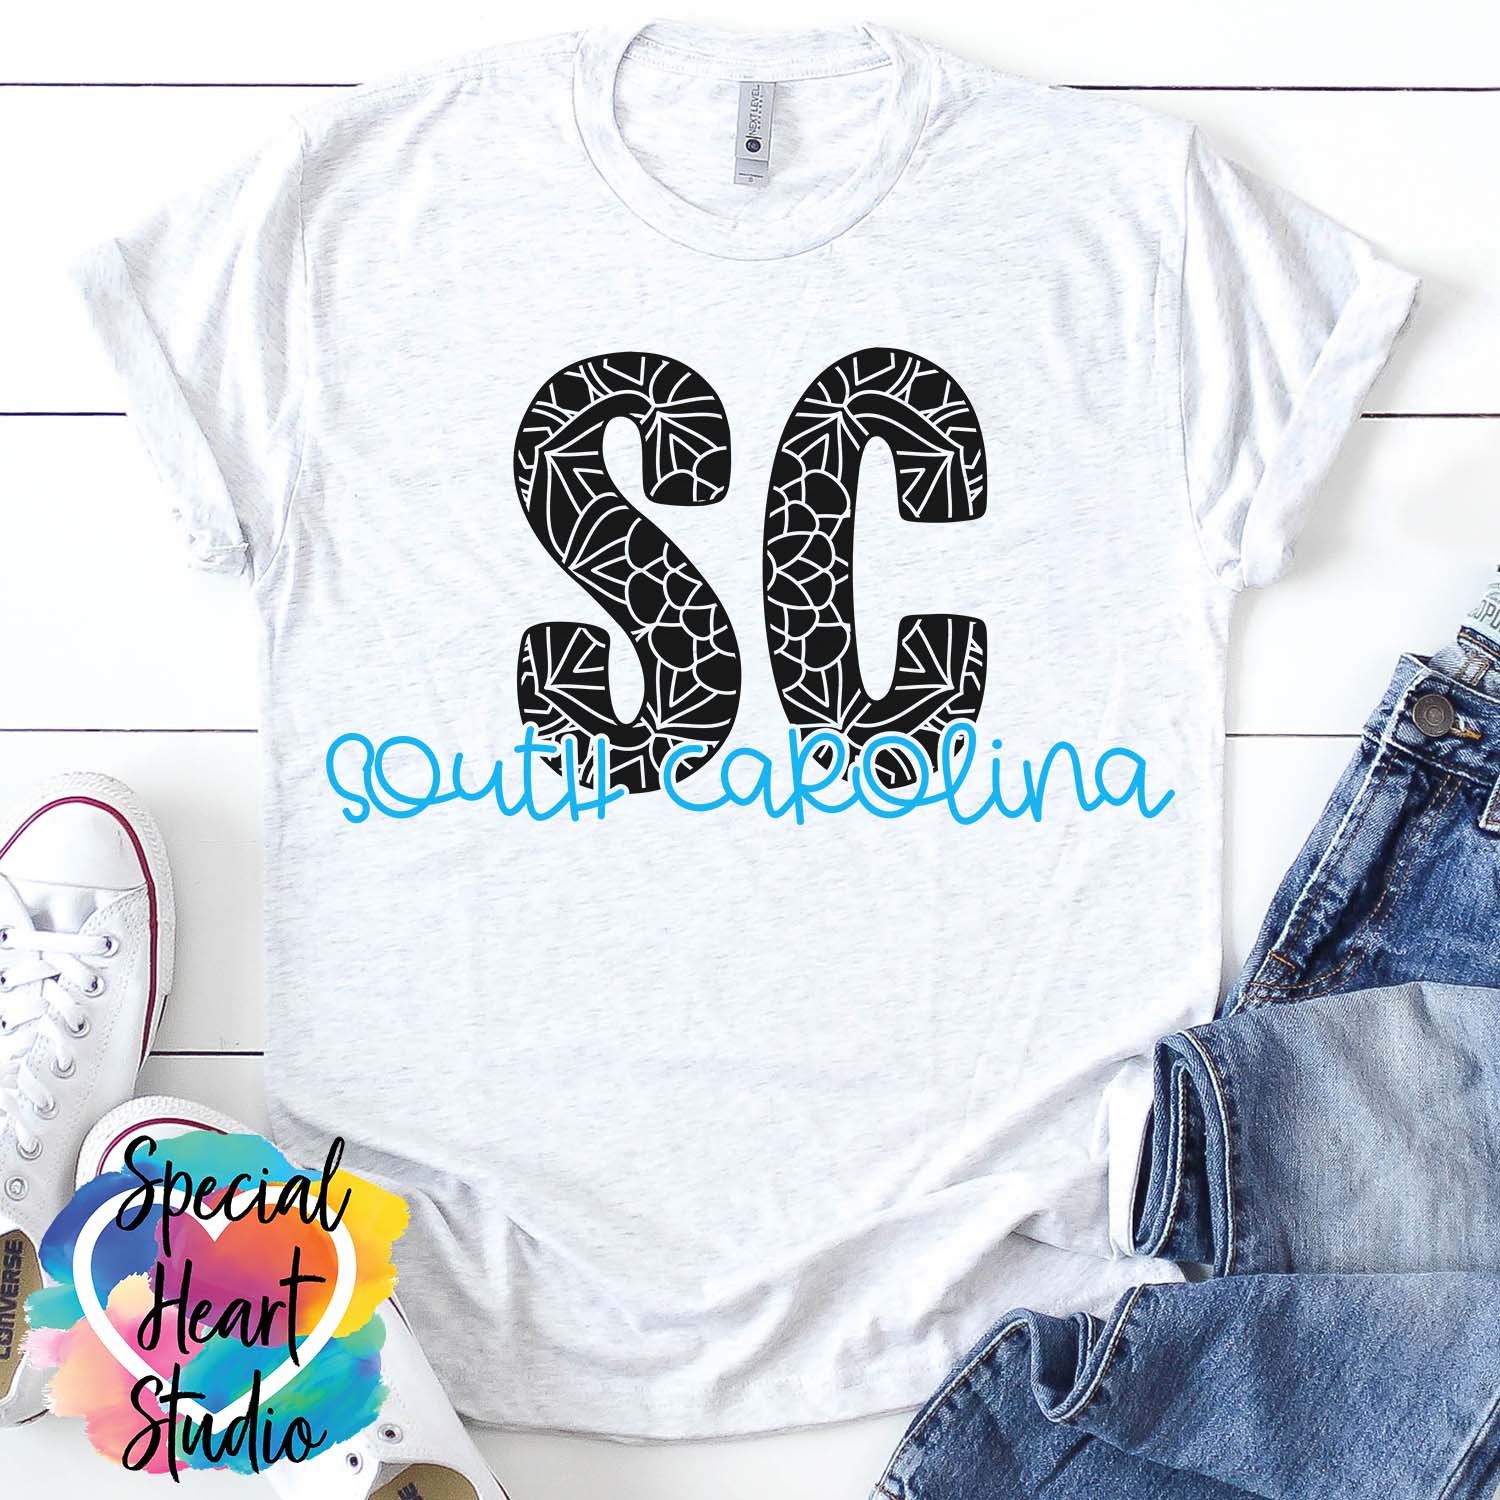 South Carolina Mandala SVG shirt mockup